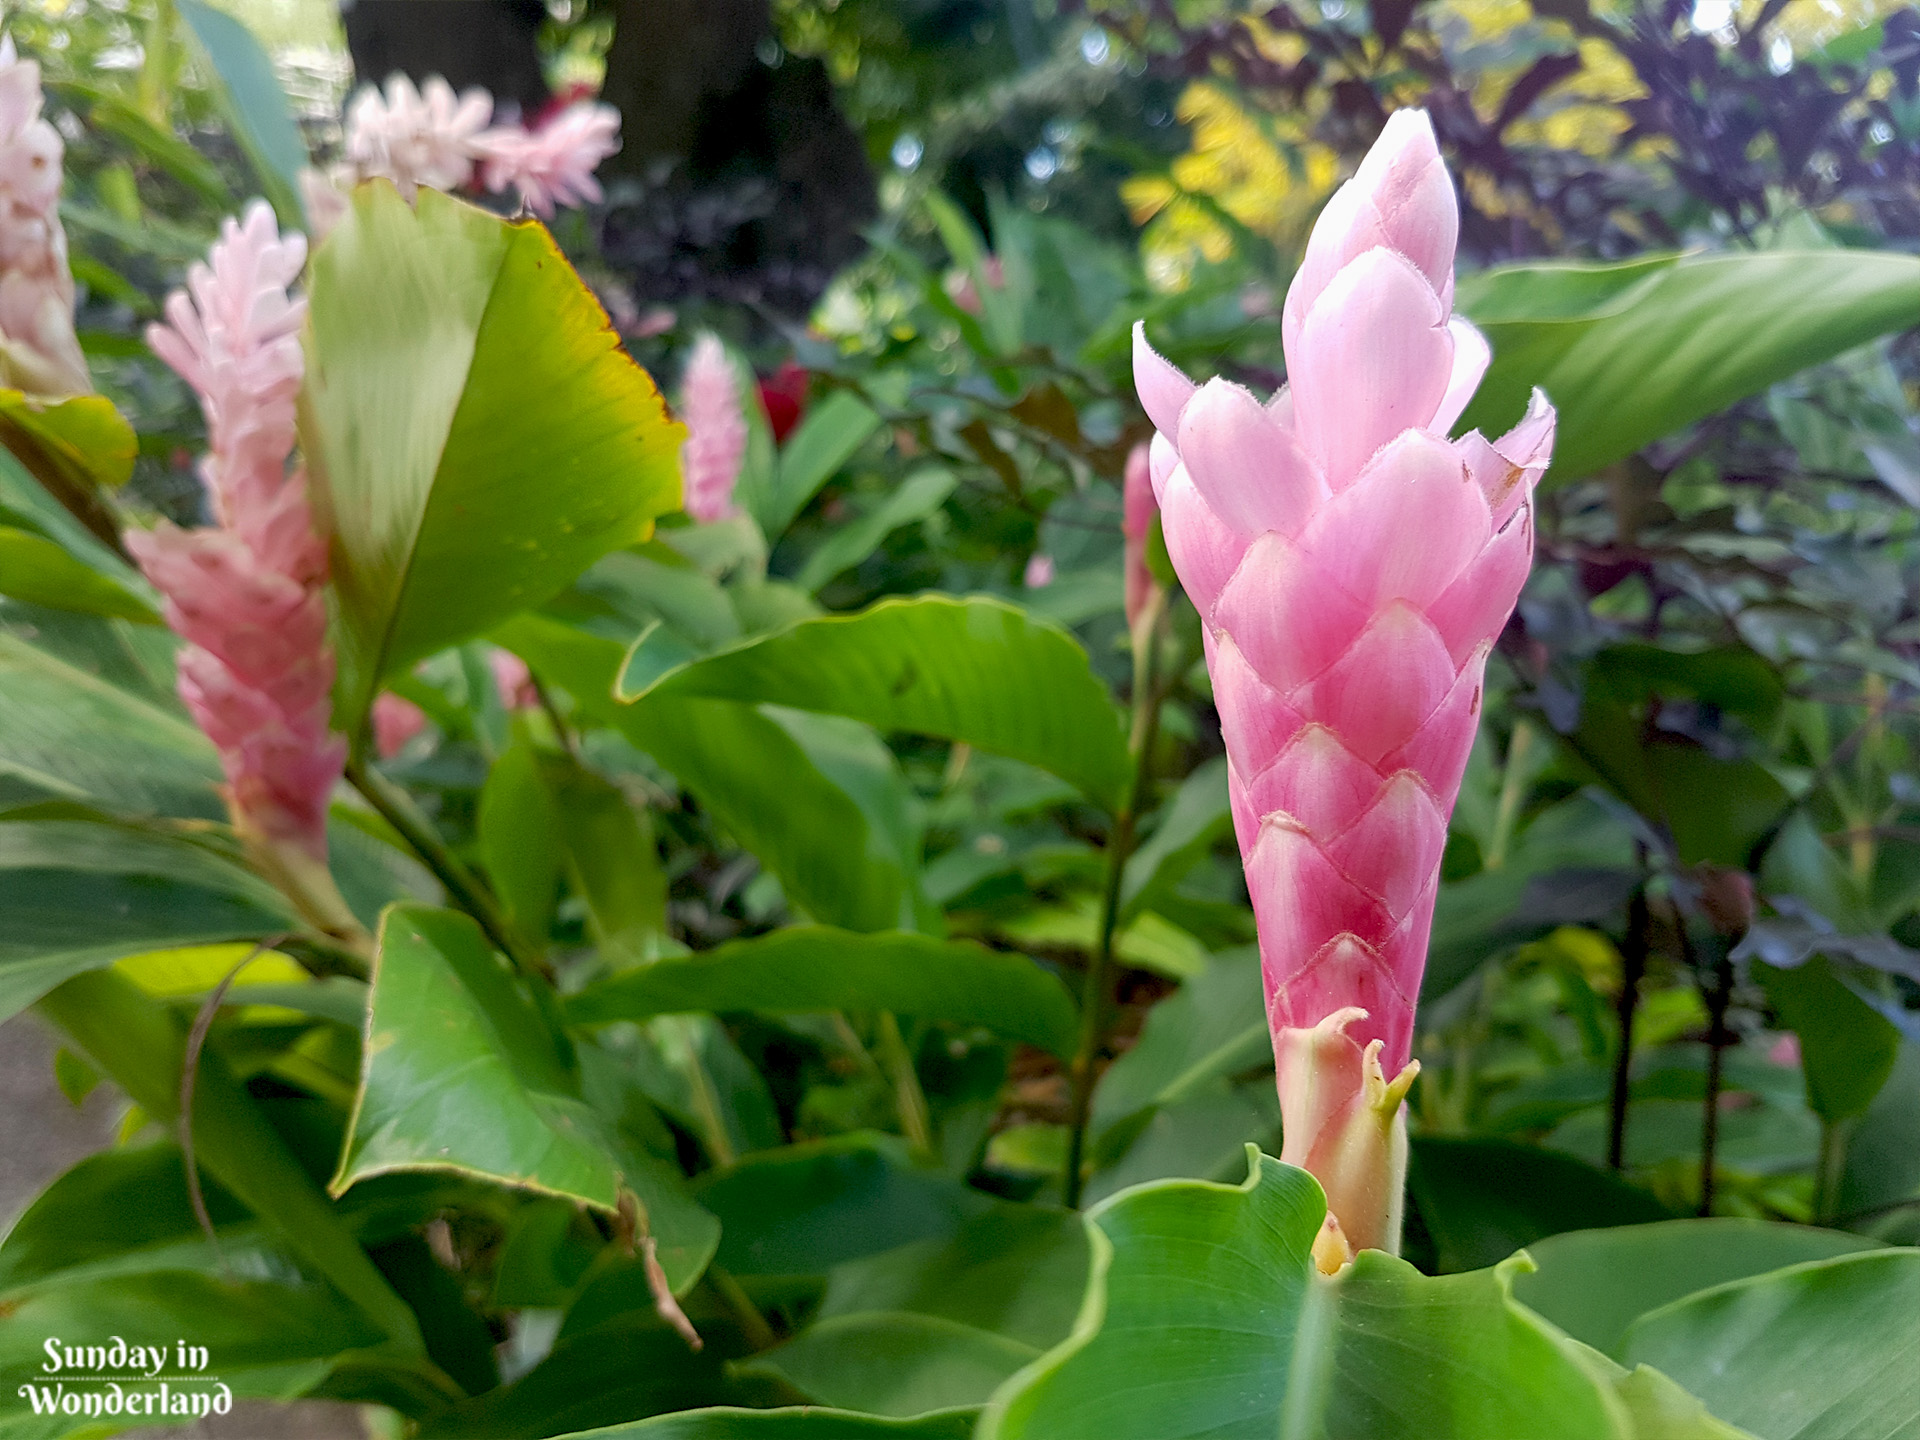 A beautiful pink flower in Botanical Garden in Deshaies in Guadeloupe - Sunday in Wonderland Blog